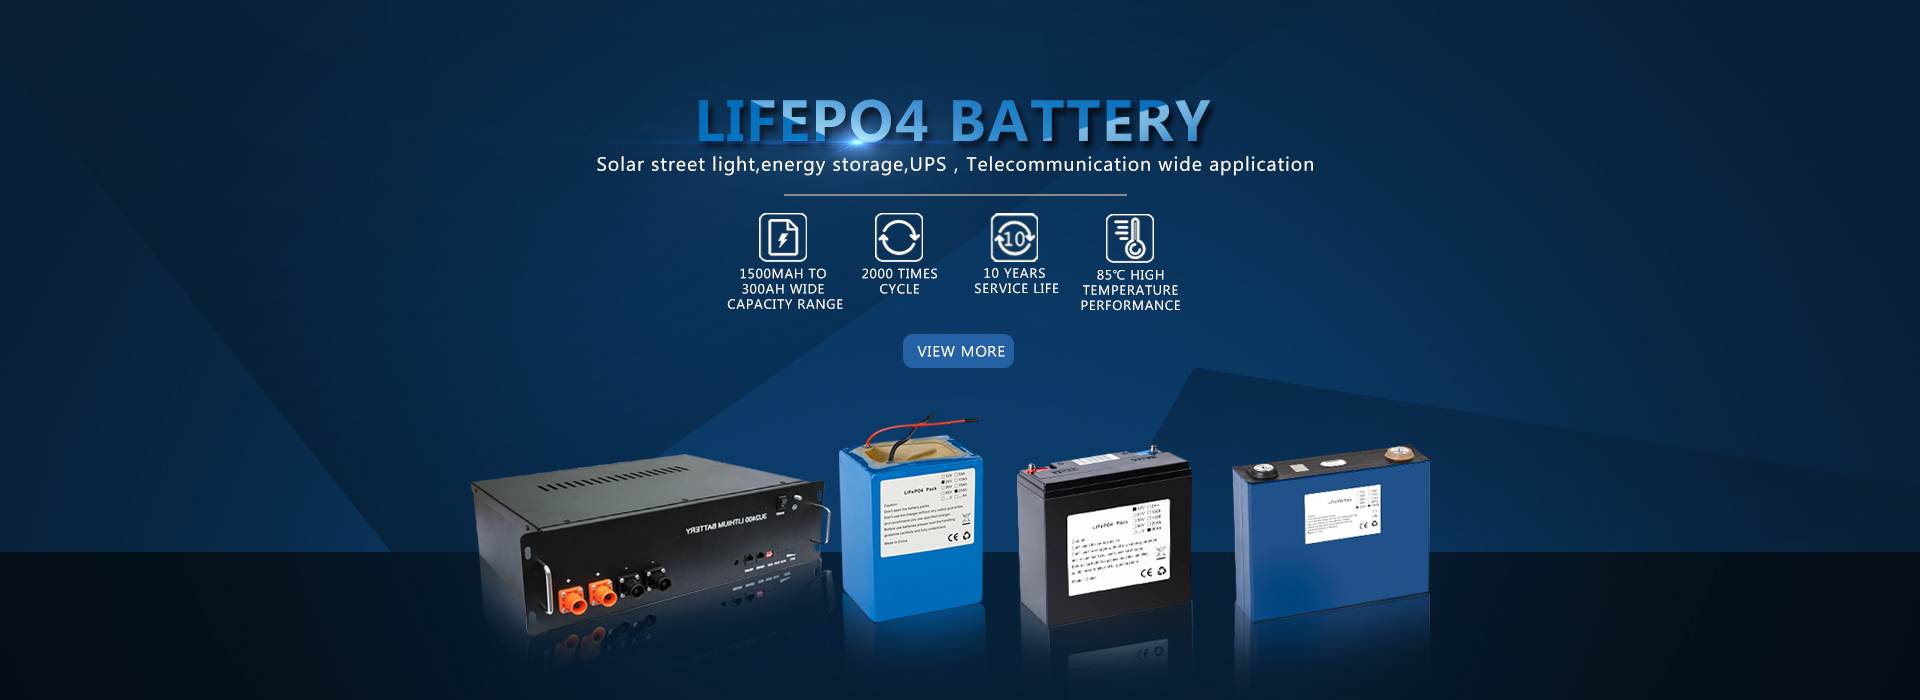 Lifepo4 Batteryï¼ˆLFPï¼ ‰ Hersteller